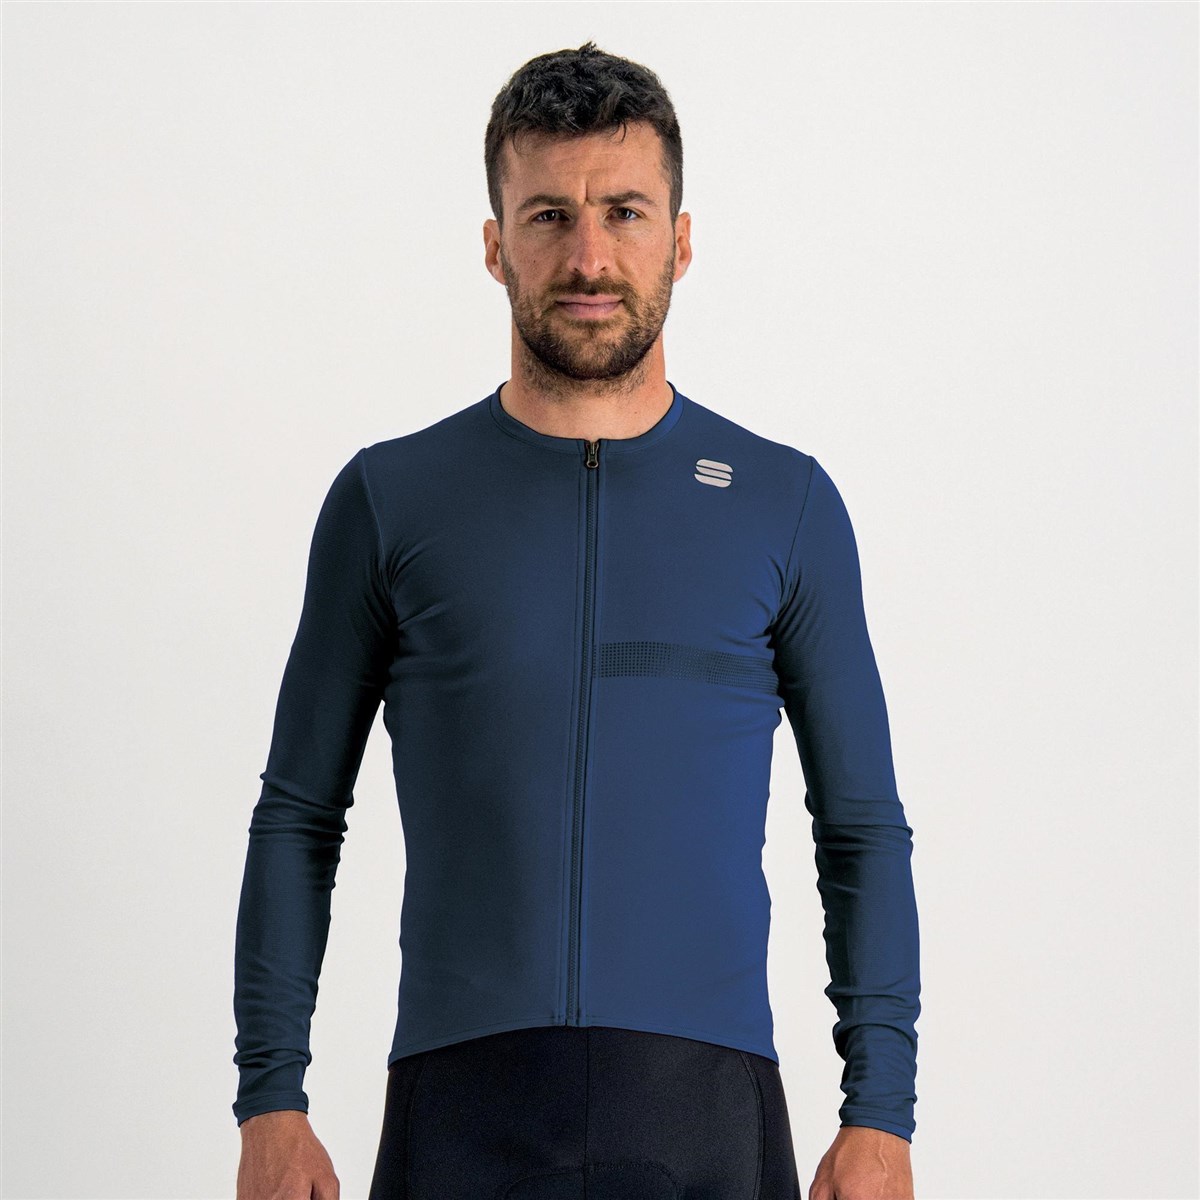 Sportful Matchy Long Sleeve Jersey product image